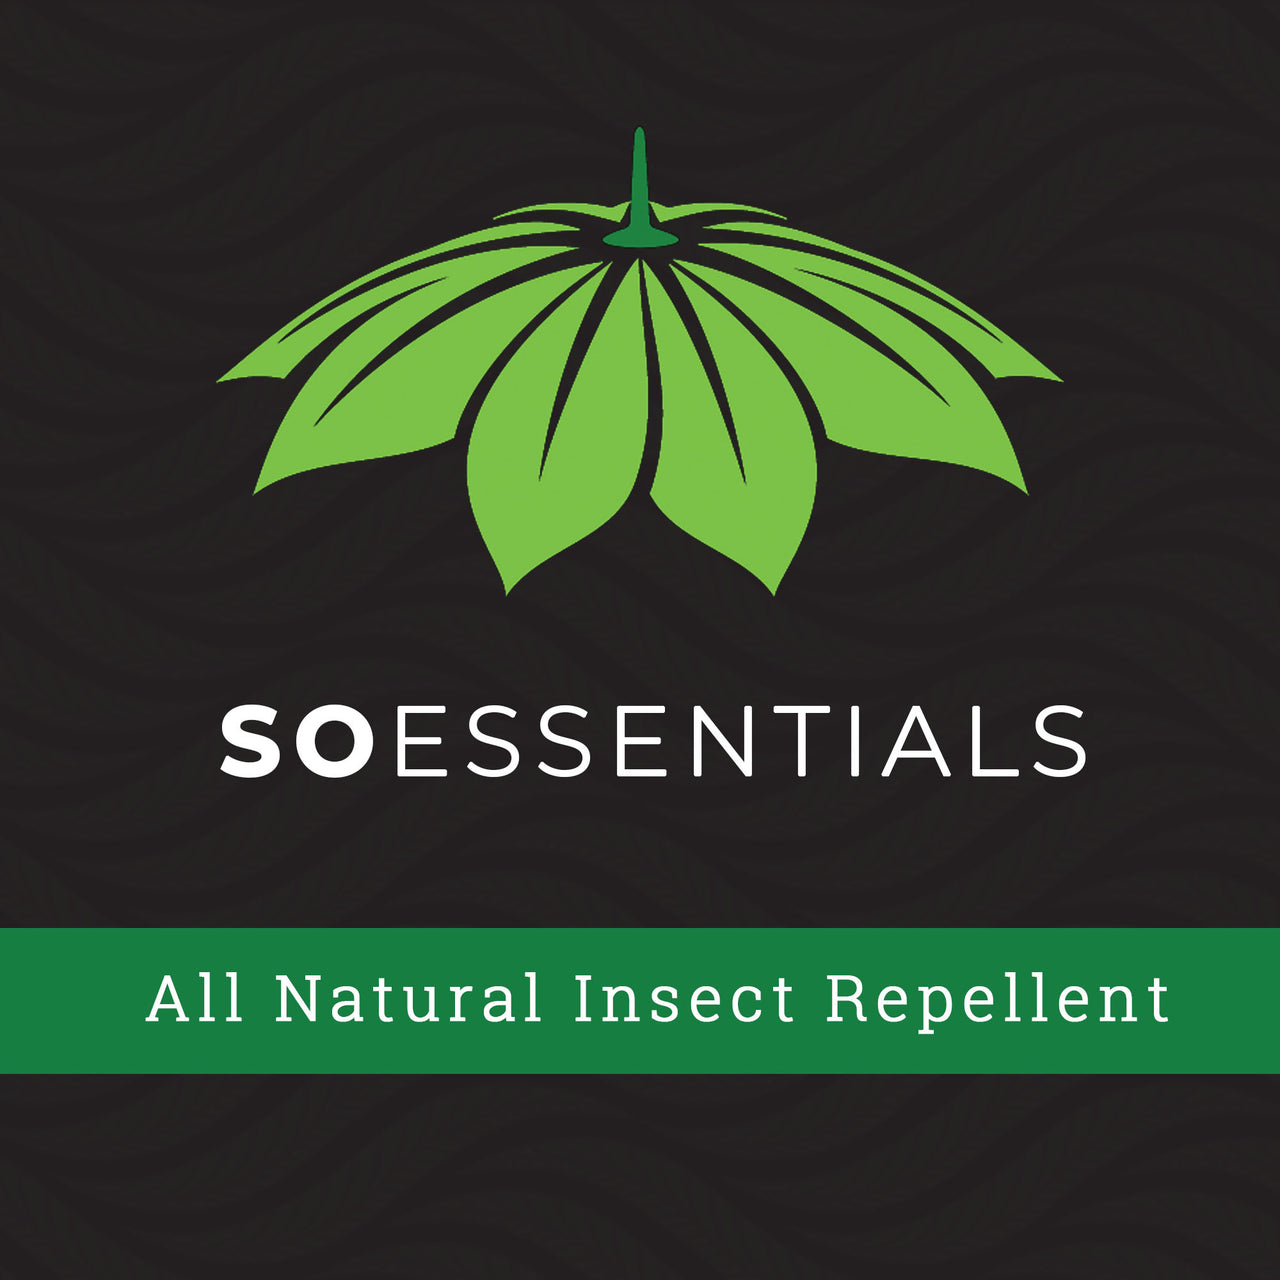 SO Essentials All Natural Insect Repellent Label